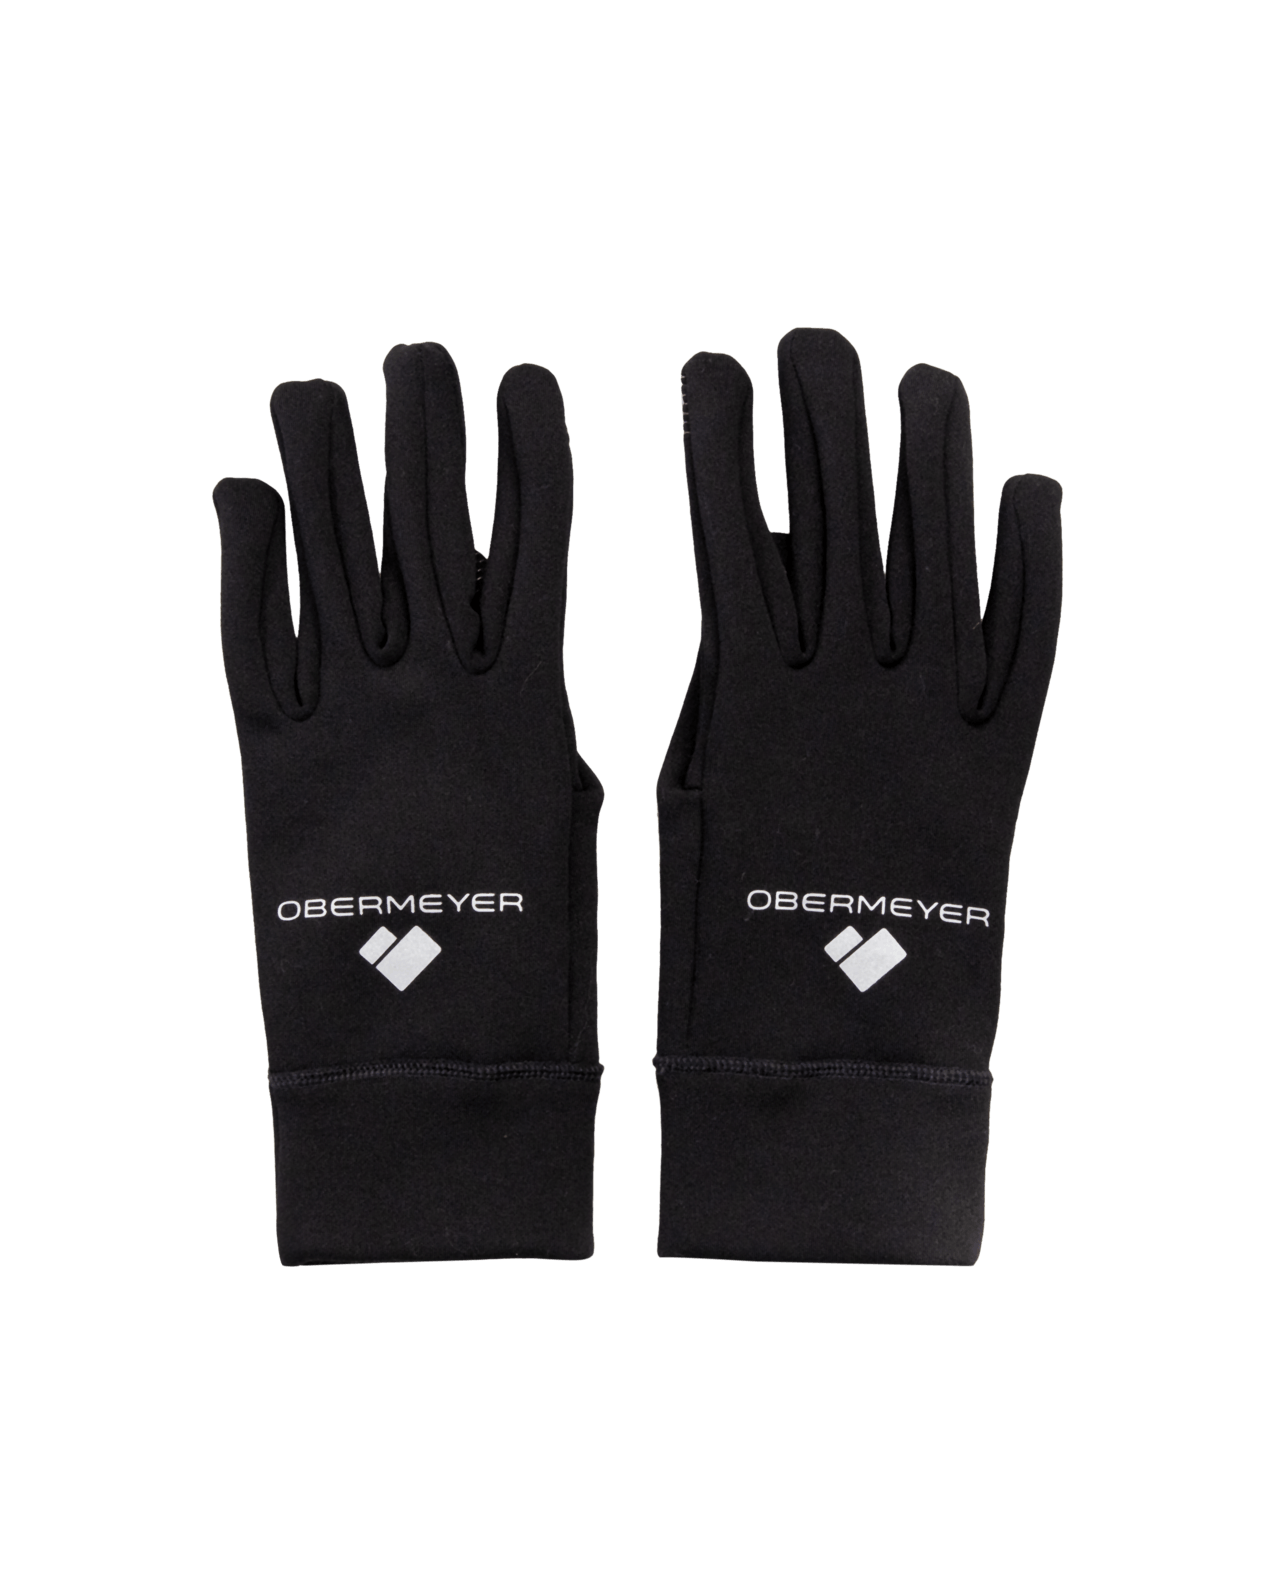 Obermeyer Liner Glove | Curated.com